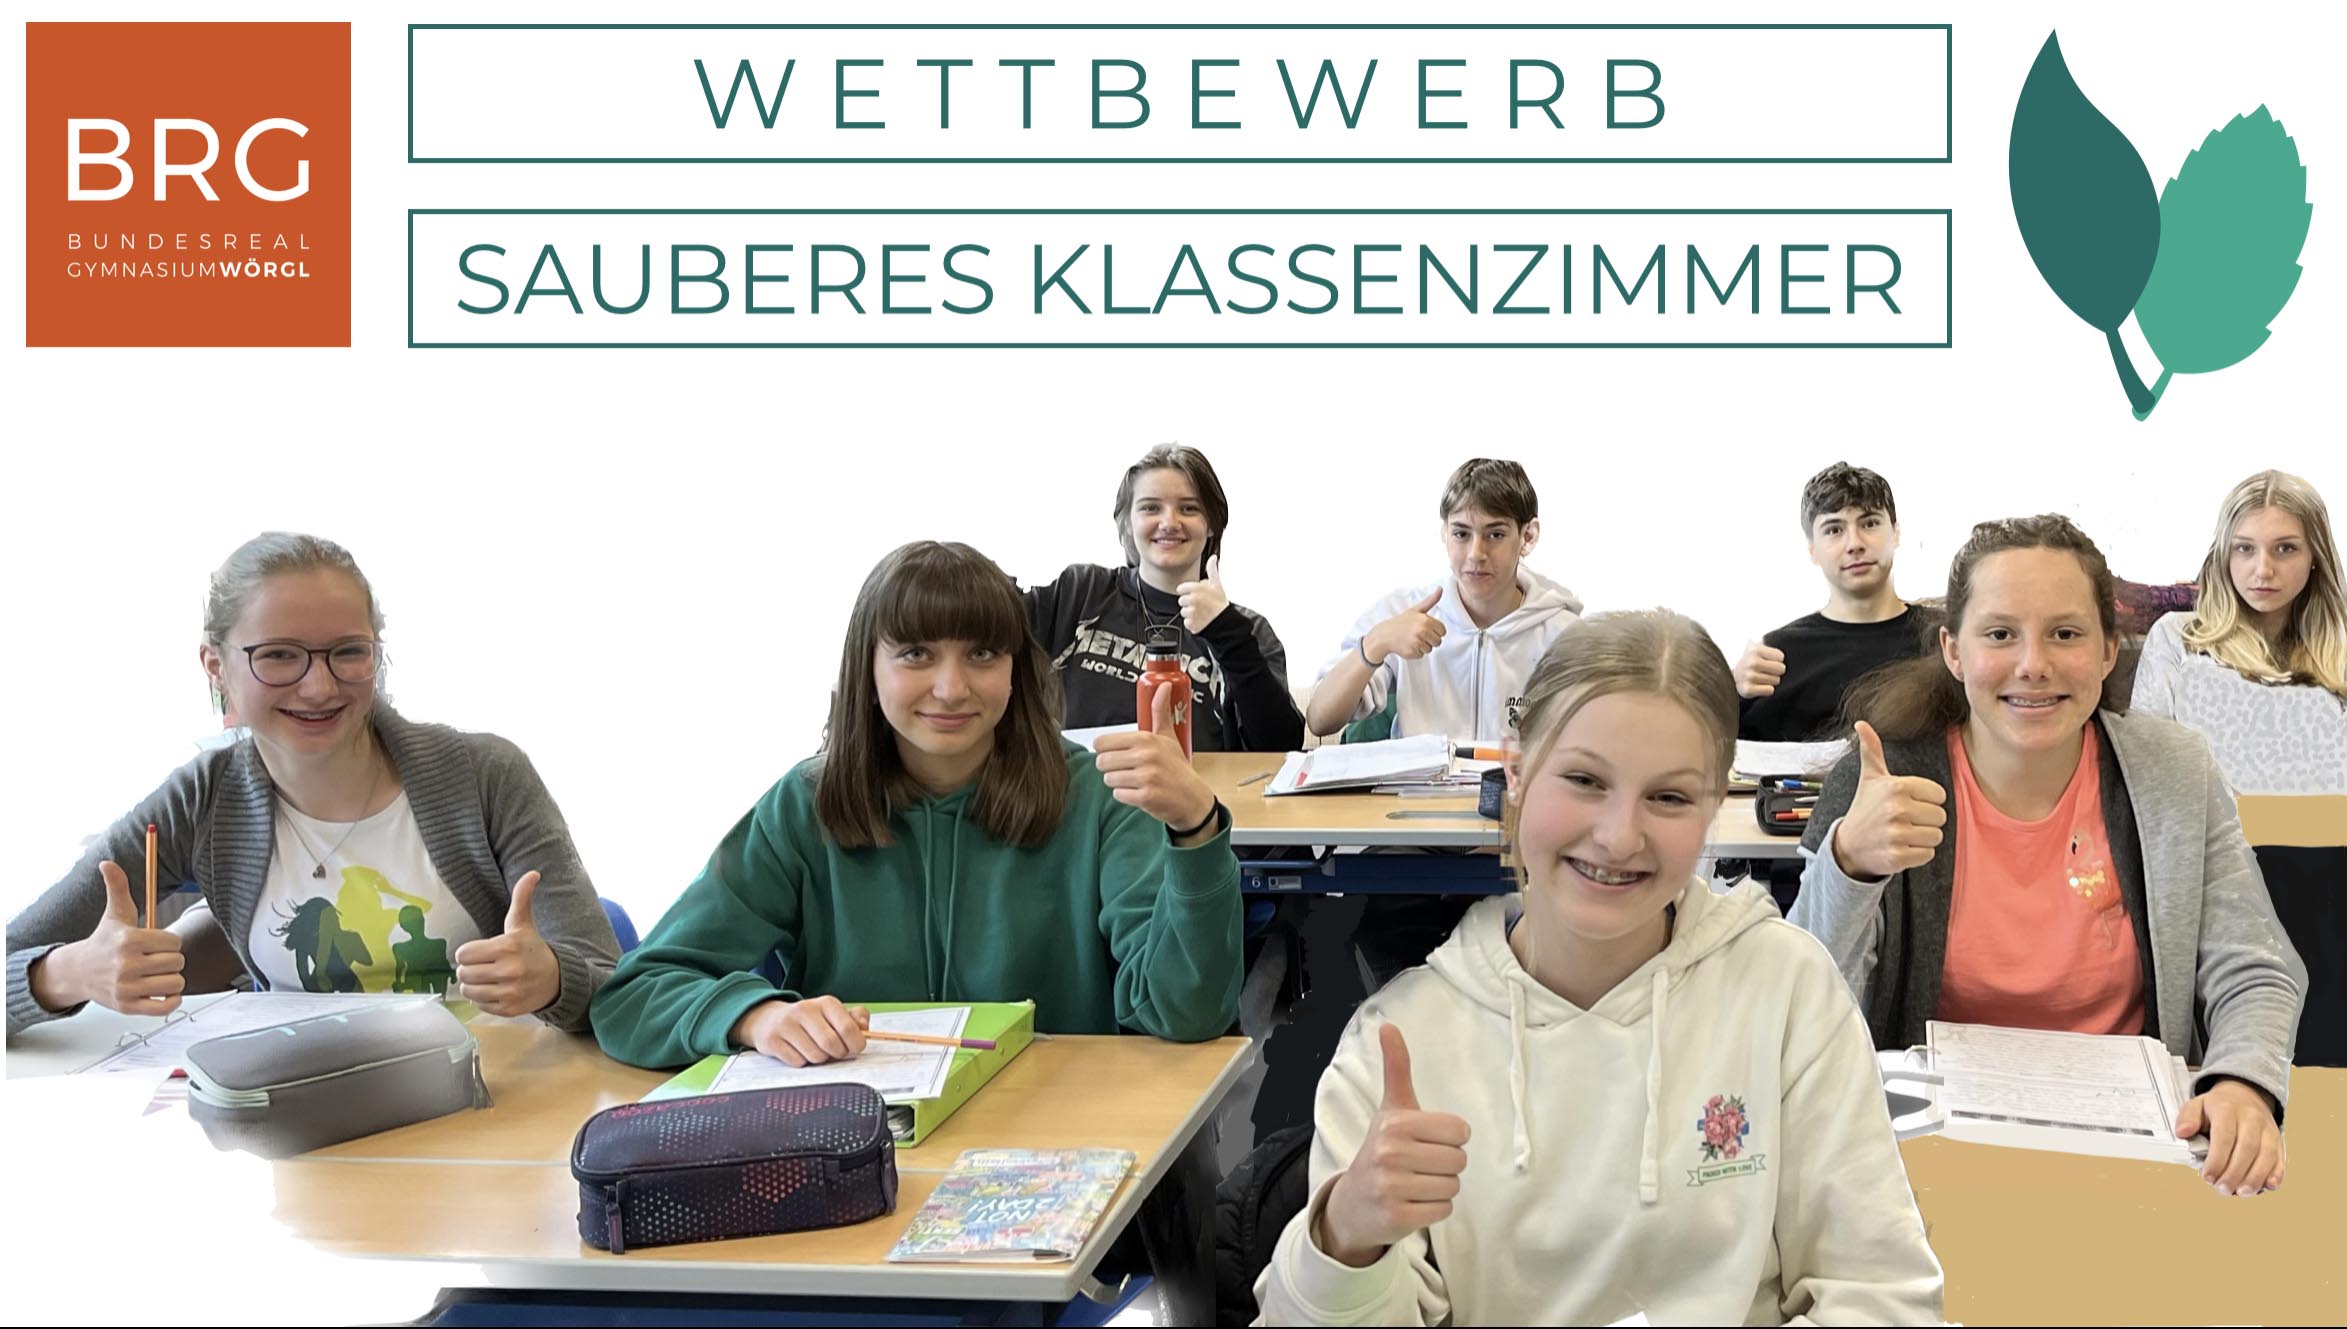 Wettbewerb Sauberes Klassenzimmer | BRG Wörgl